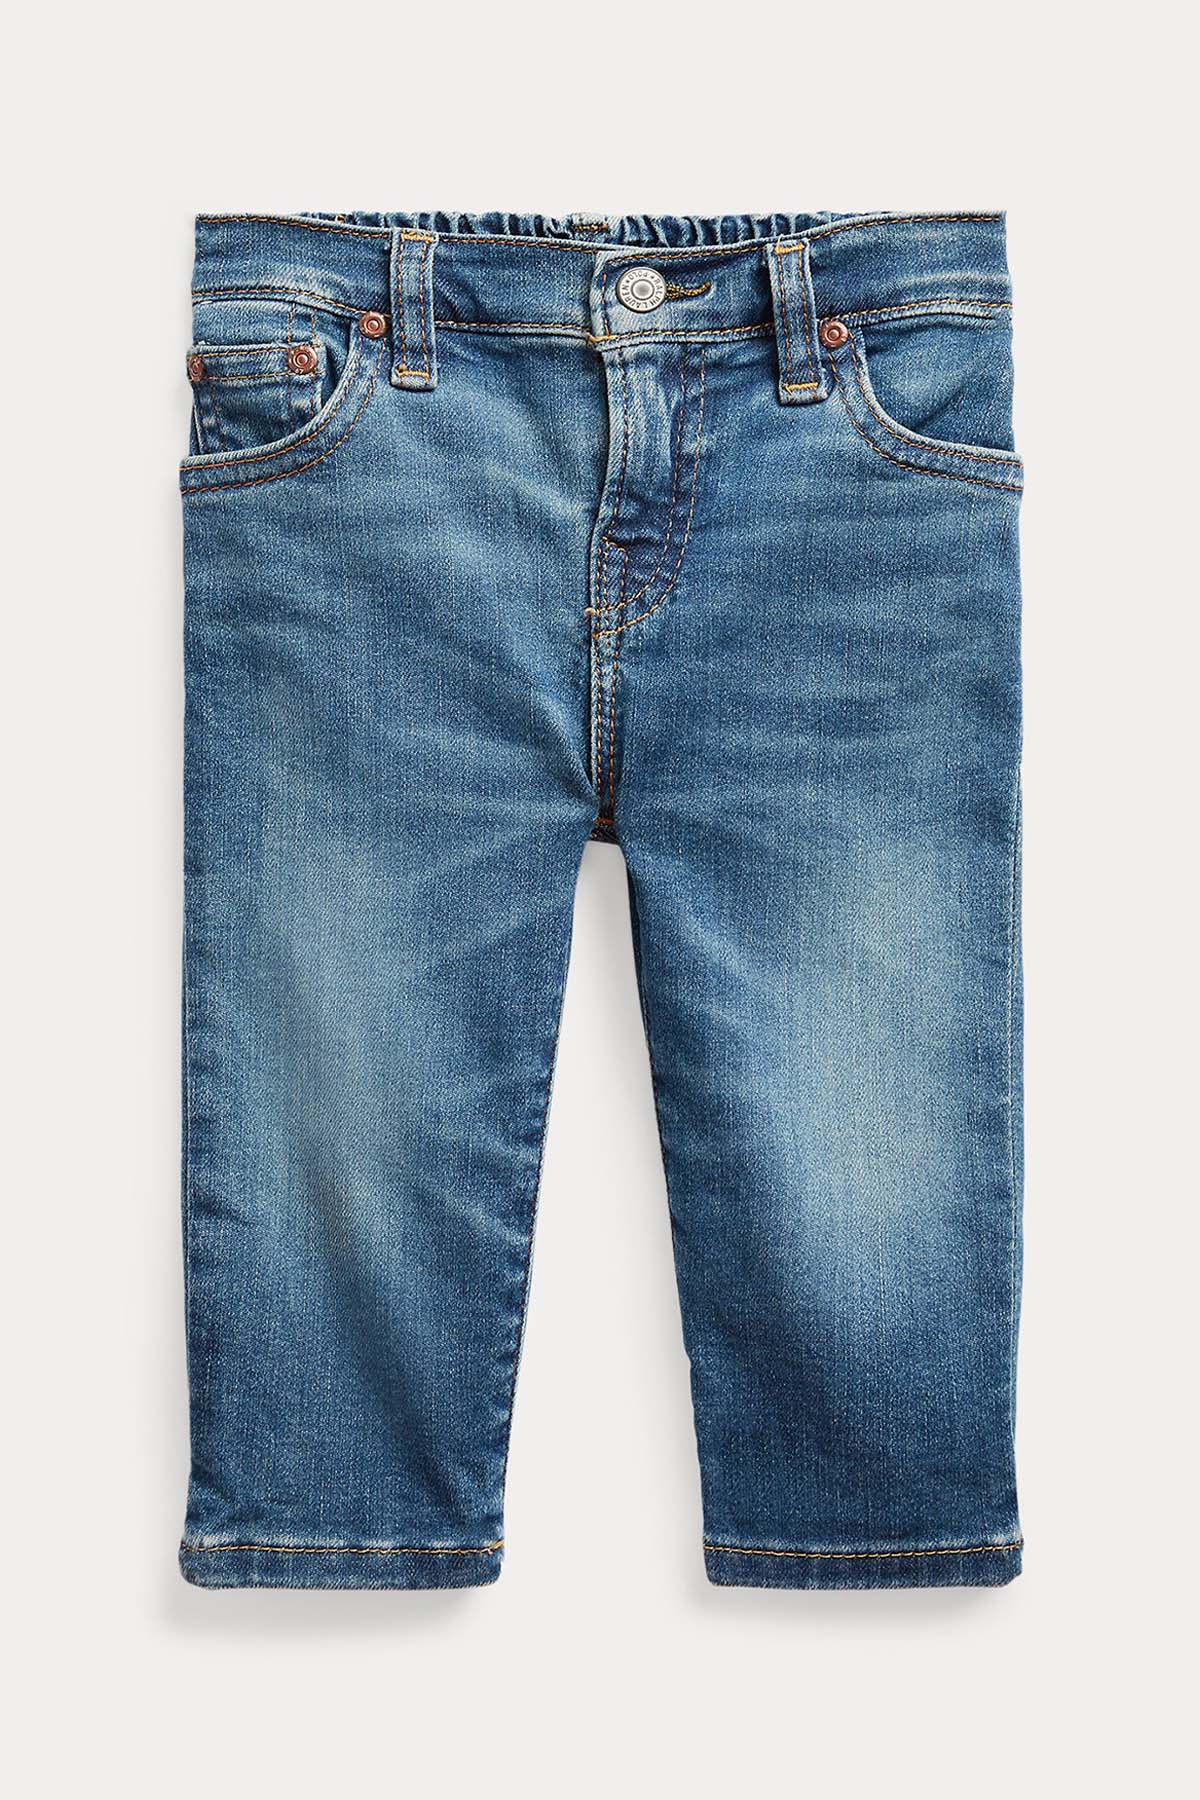 Polo Ralph Lauren Kids 12-18 Aylık Unisex Bebek Sullivan Slim Fit Streç Jeans